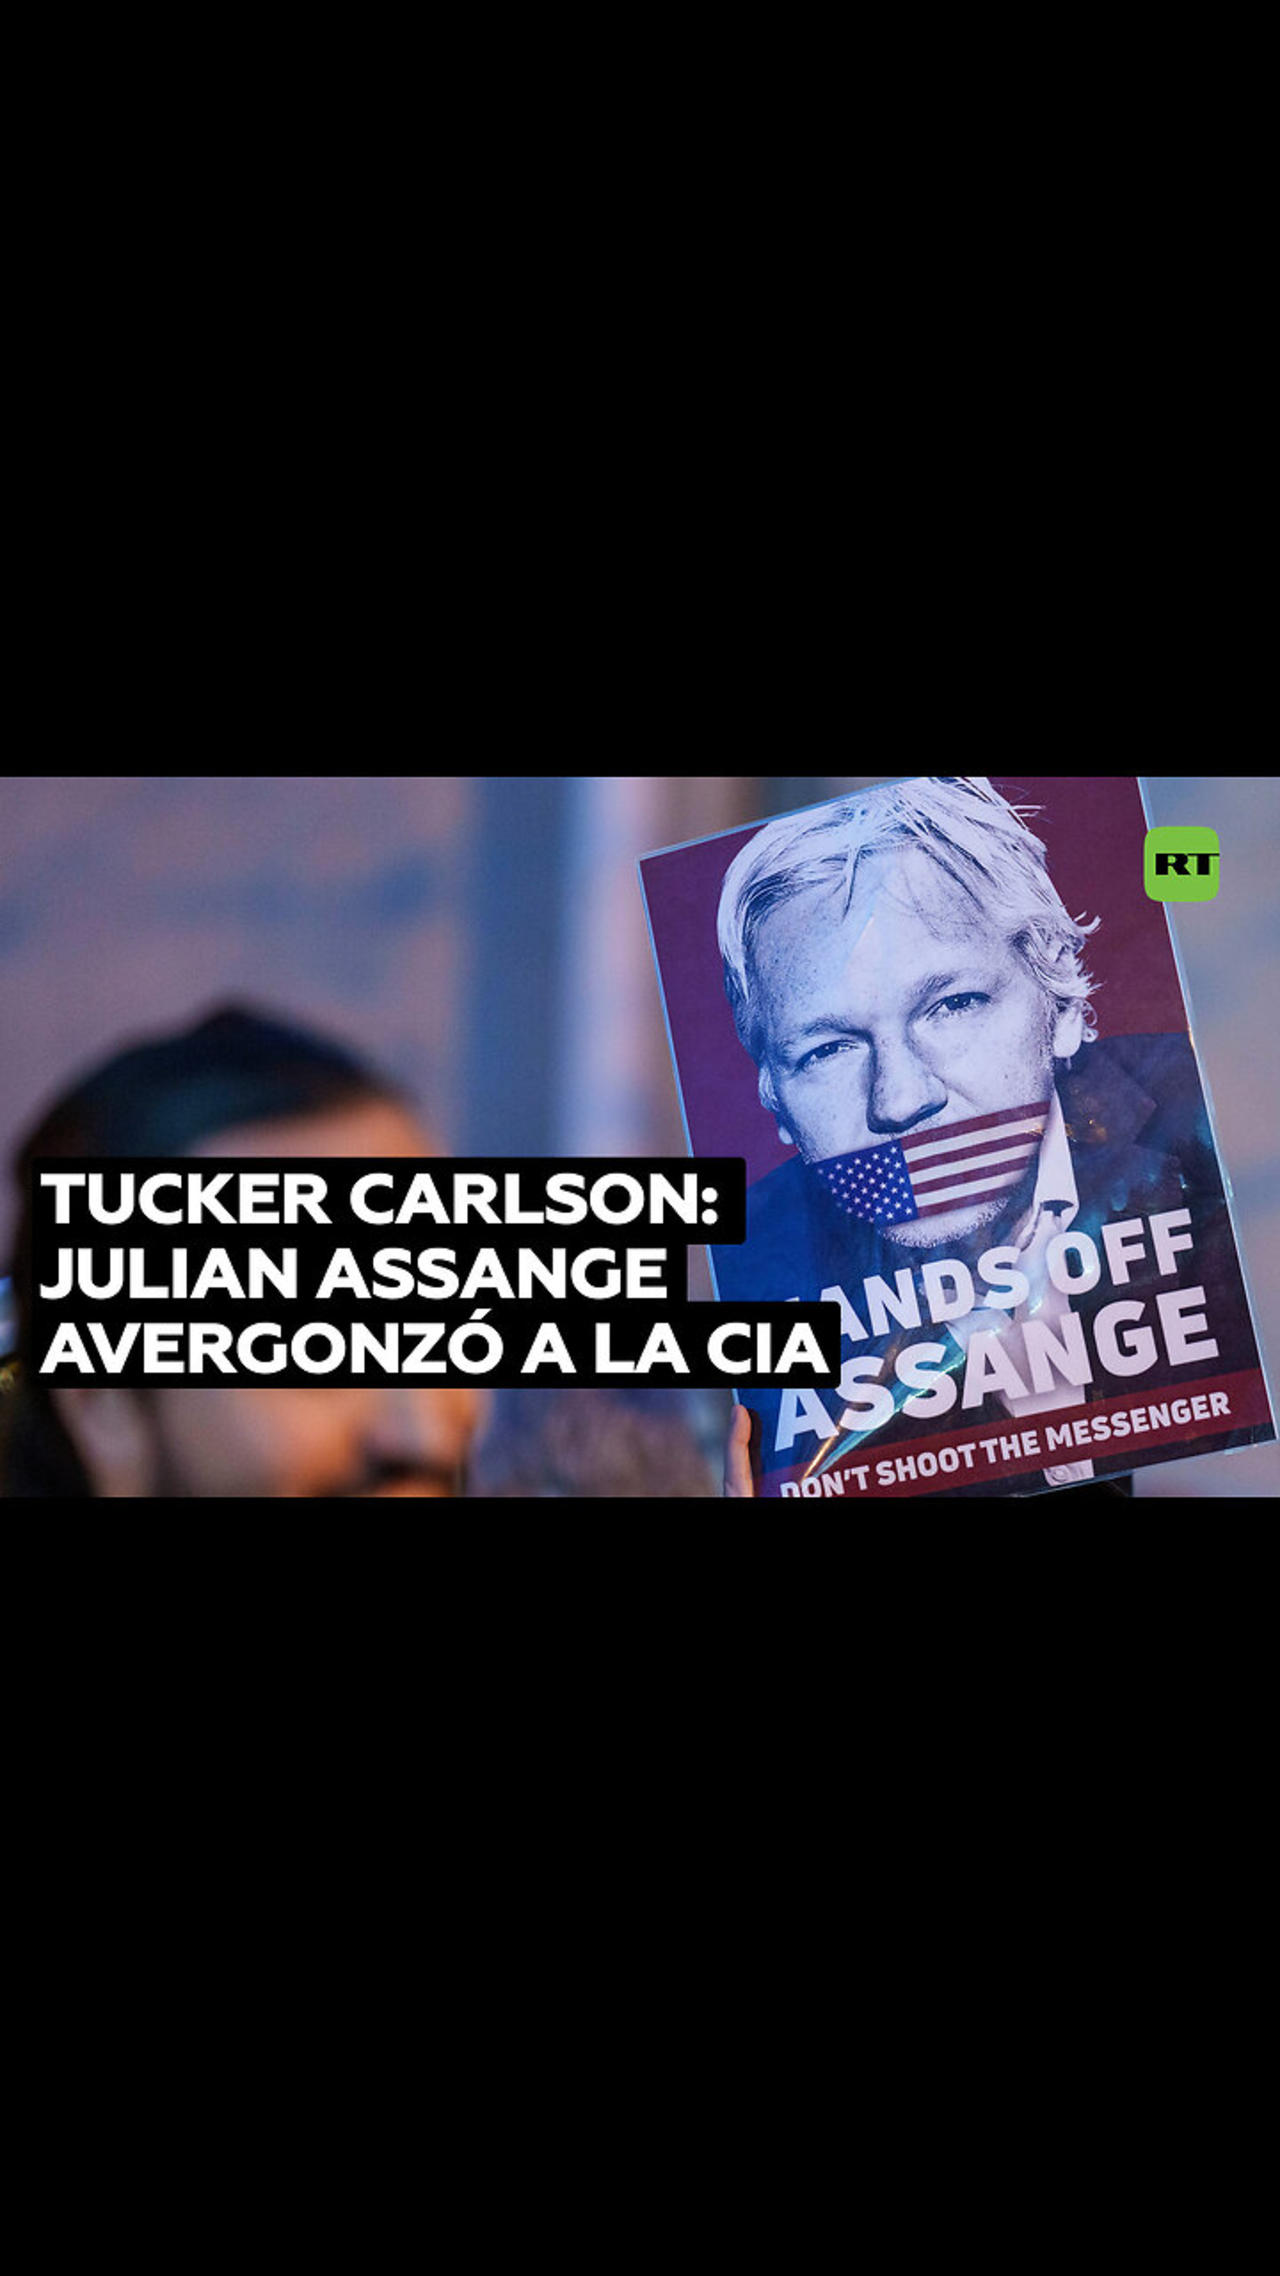 La Administración Biden intenta matar a Julian Assange por “avergonzar a la CIA”